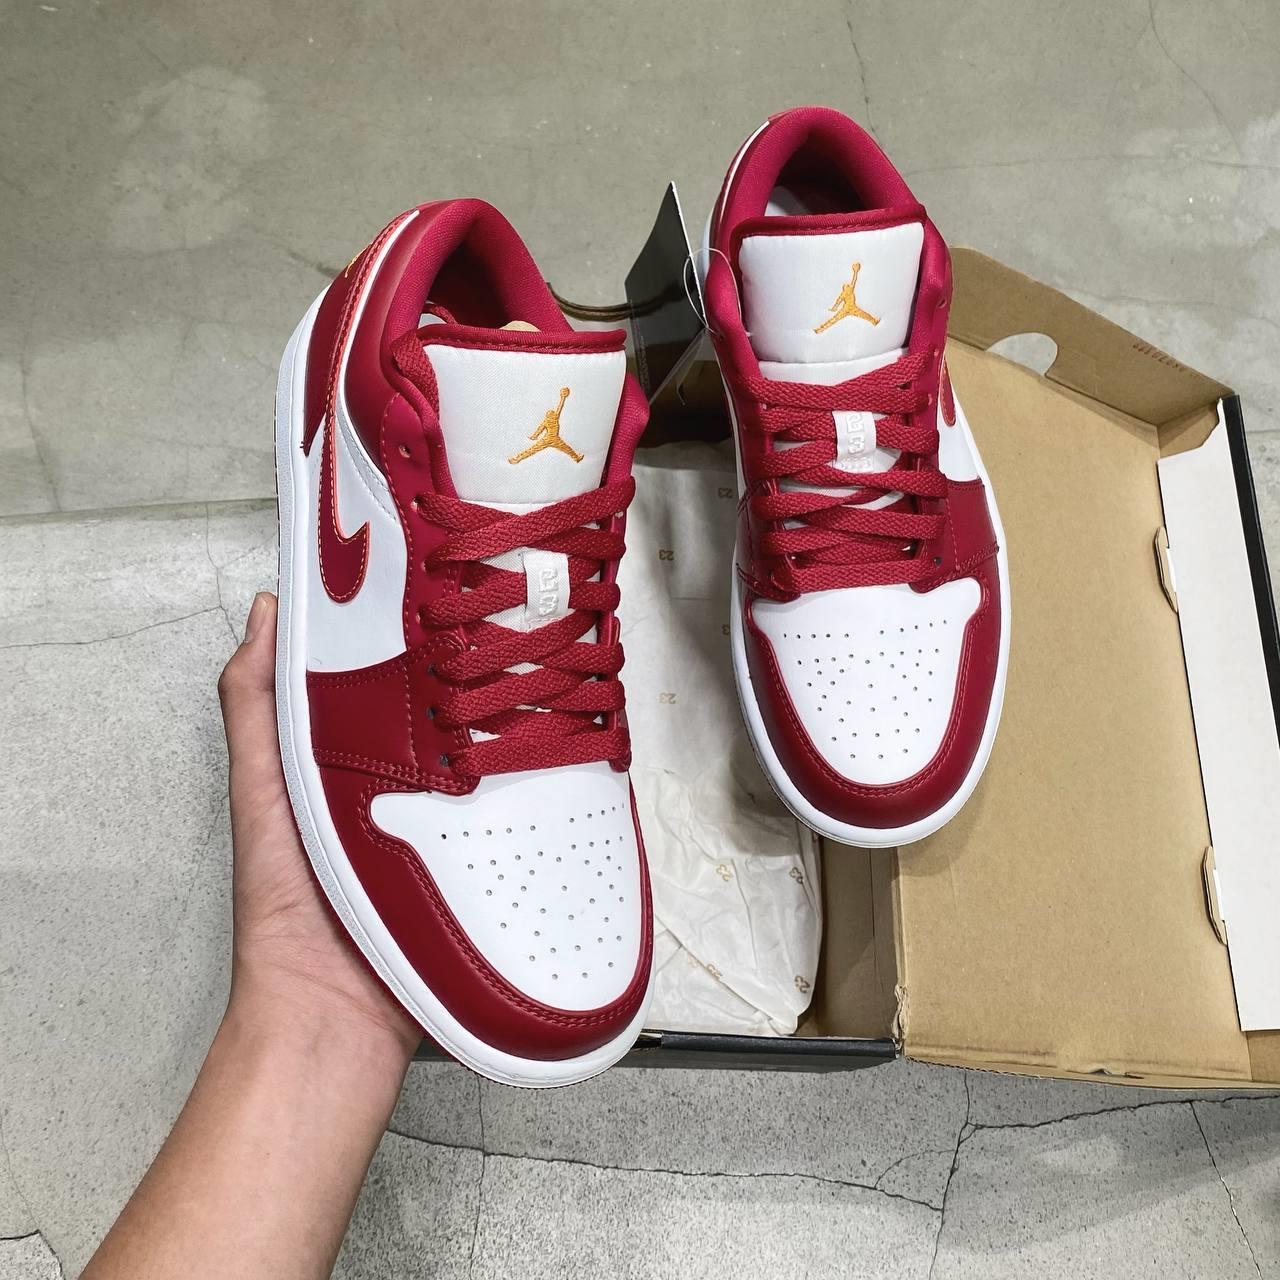 Minhshop.Vn - Giày Nike Air Jordan 1 Low Cardinal Red [553558 607]